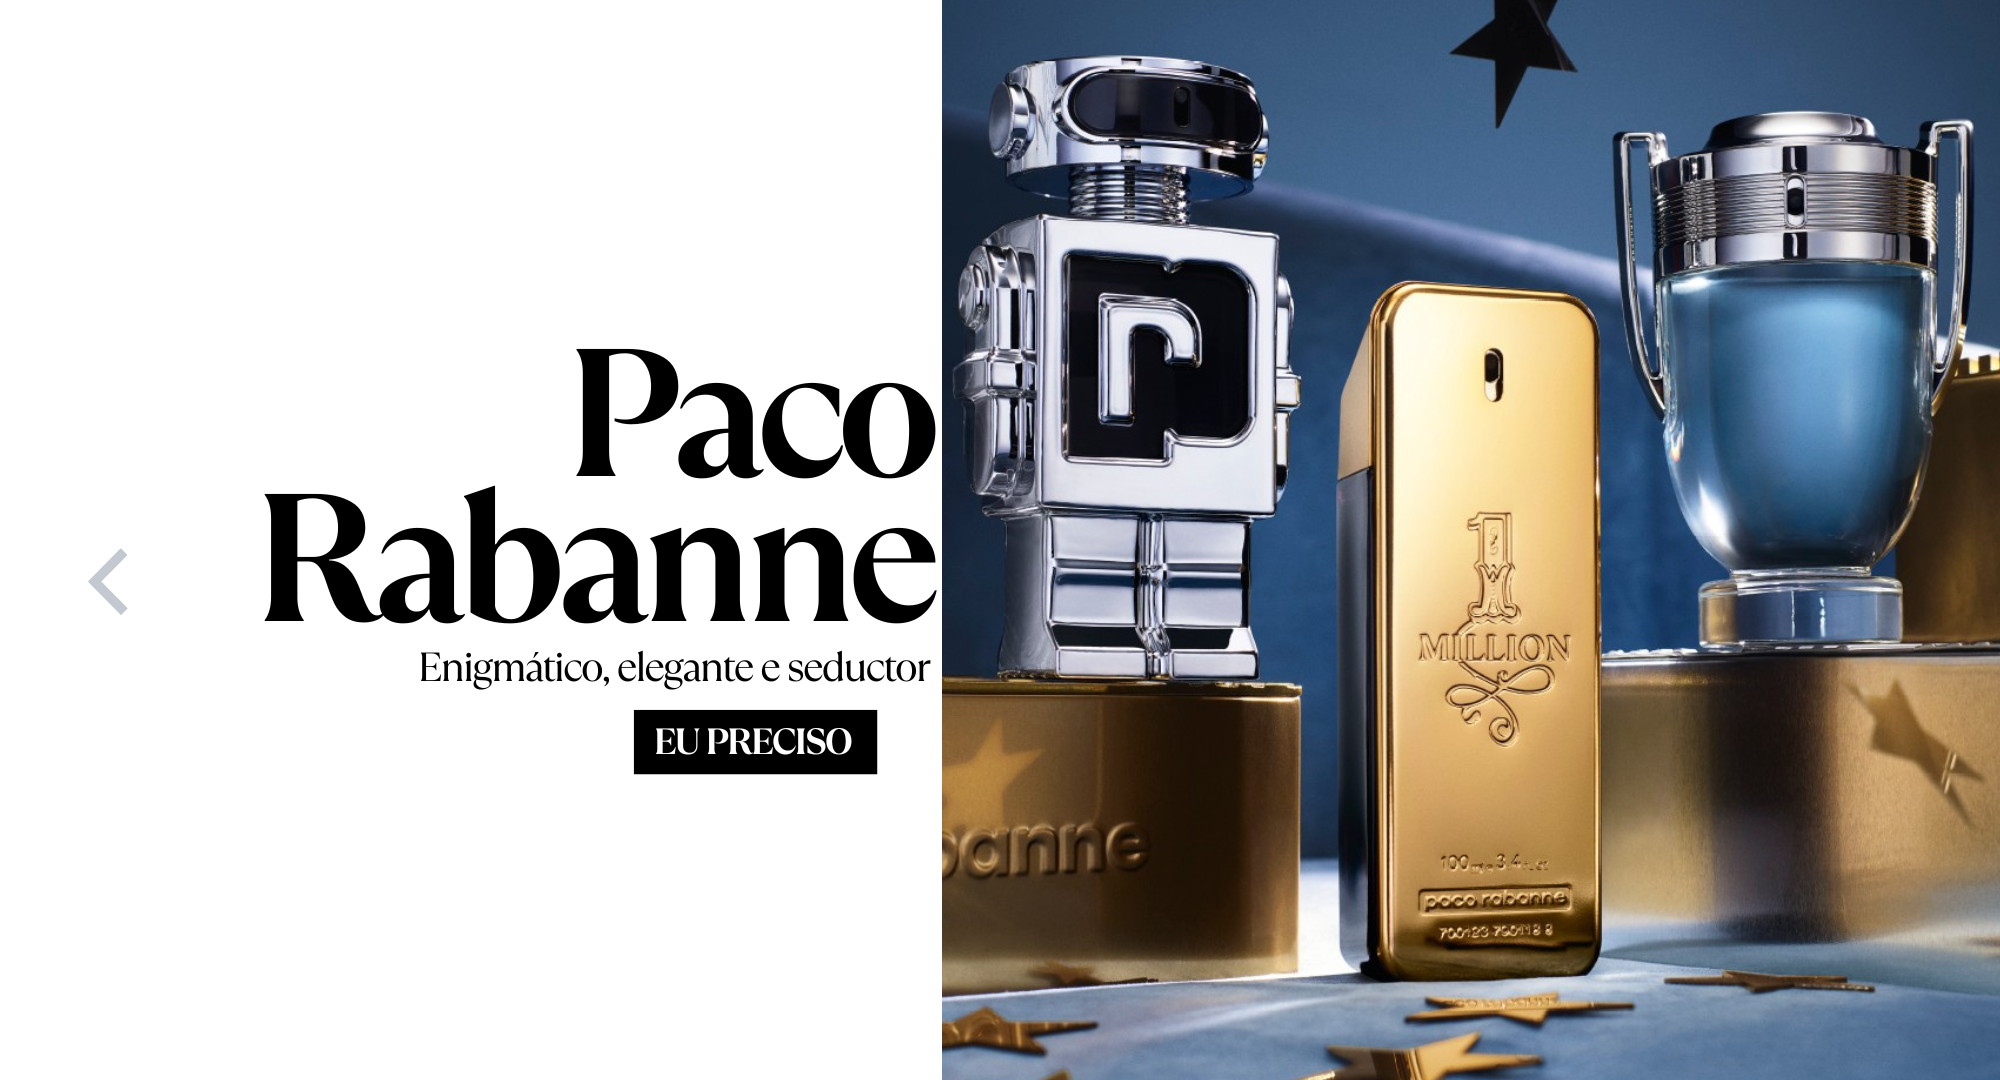 Chanel No5 Le Savon 150g  Ichiban Perfumes & Cosmetics